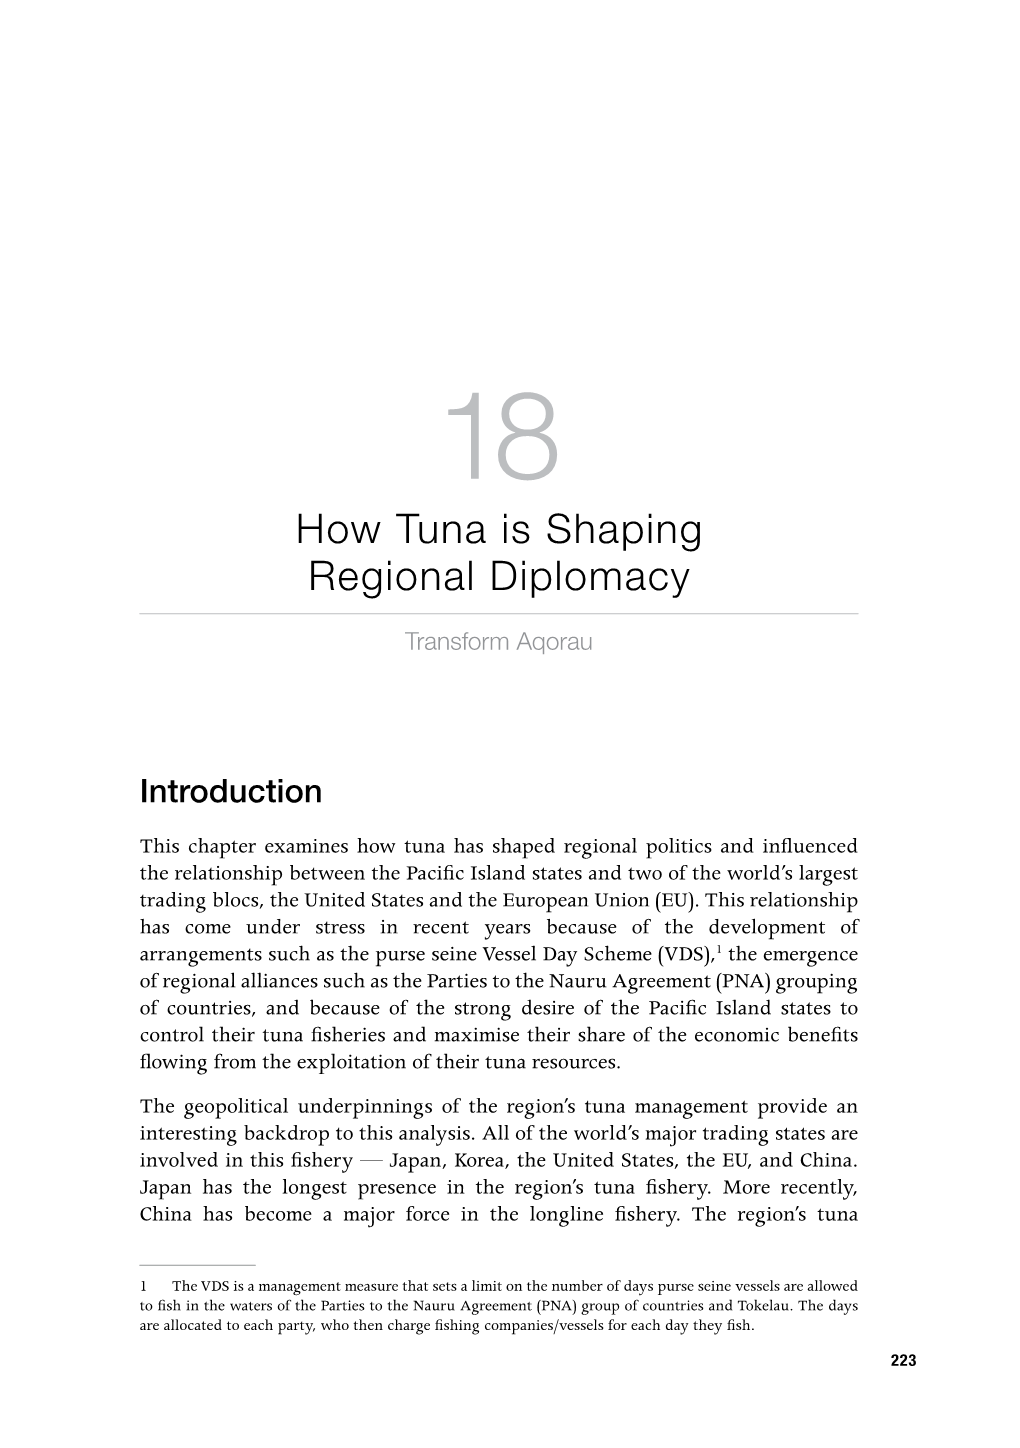 How Tuna Is Shaping Regional Diplomacy